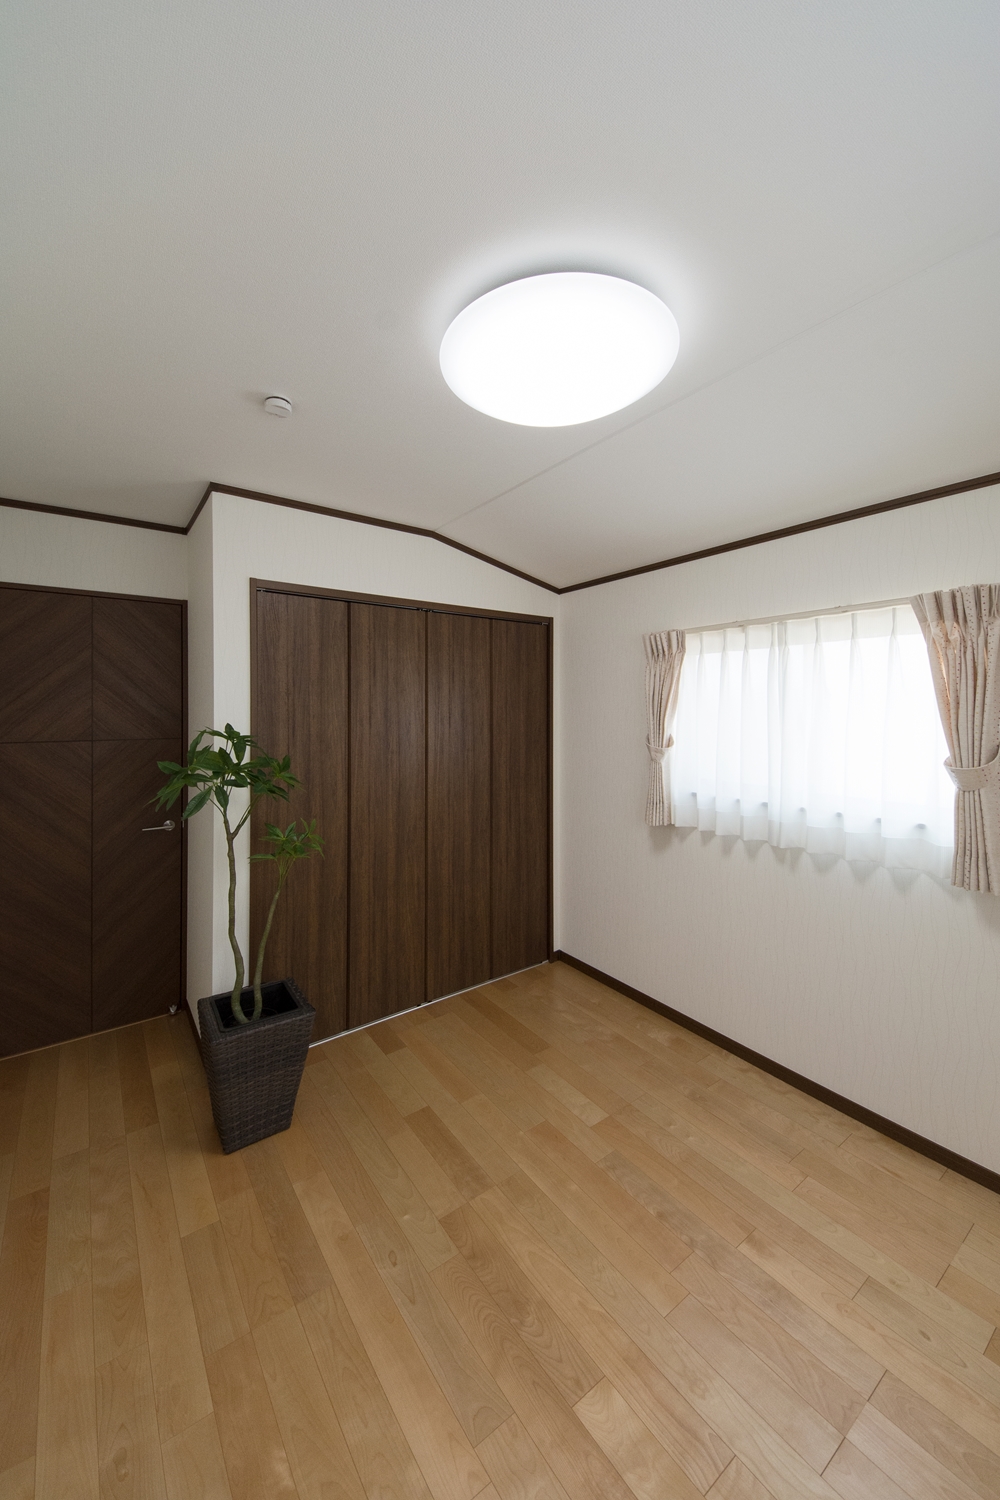 2F洋室/穏やかな木目のバーチを床材にダークブラウンの建具を合わせ、落ち着いた印象に。